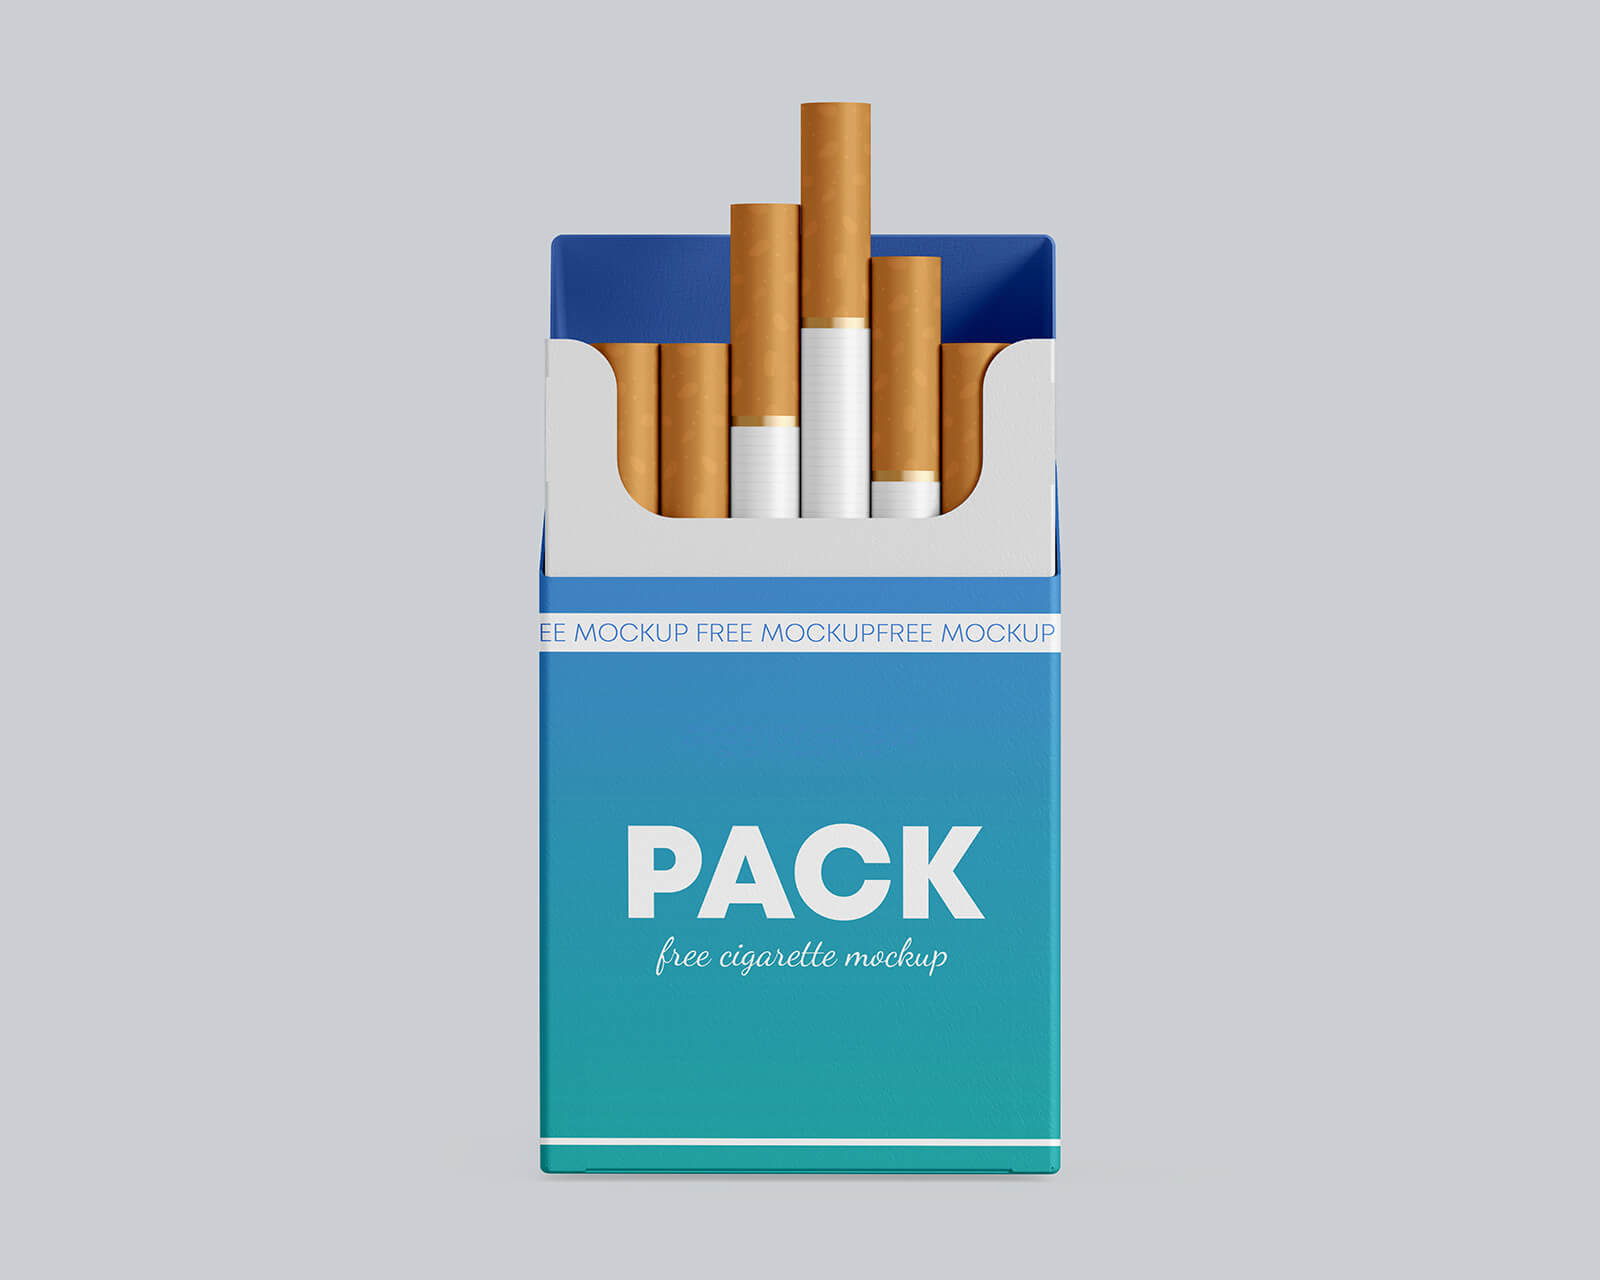 Free Cigarette Pack Mockup PSD